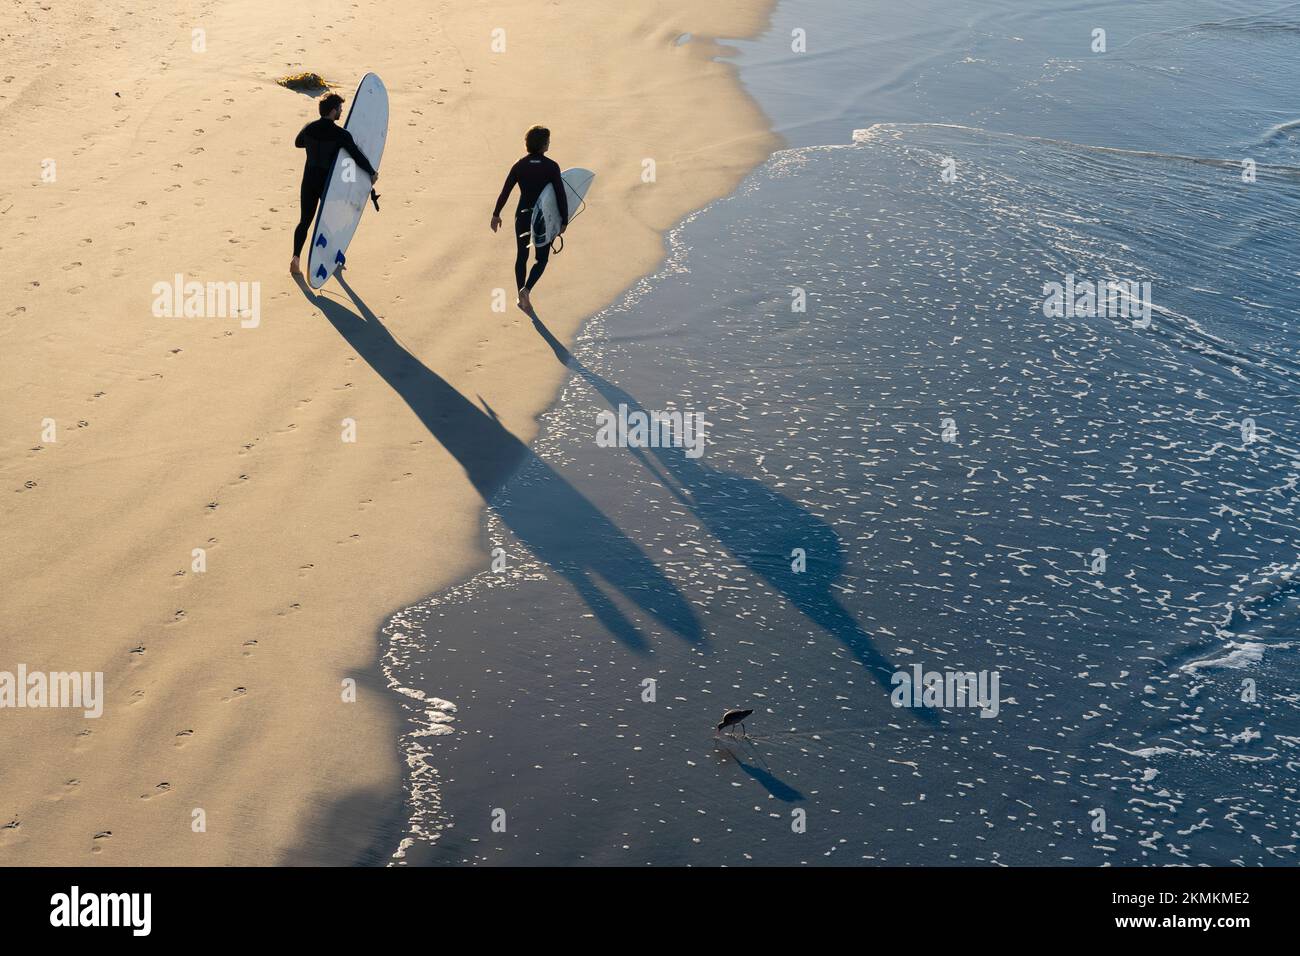 Am Oceanside City Beach in Oceanside, Kalifornien, spazieren zwei Surfer entlang der Küste. Stockfoto